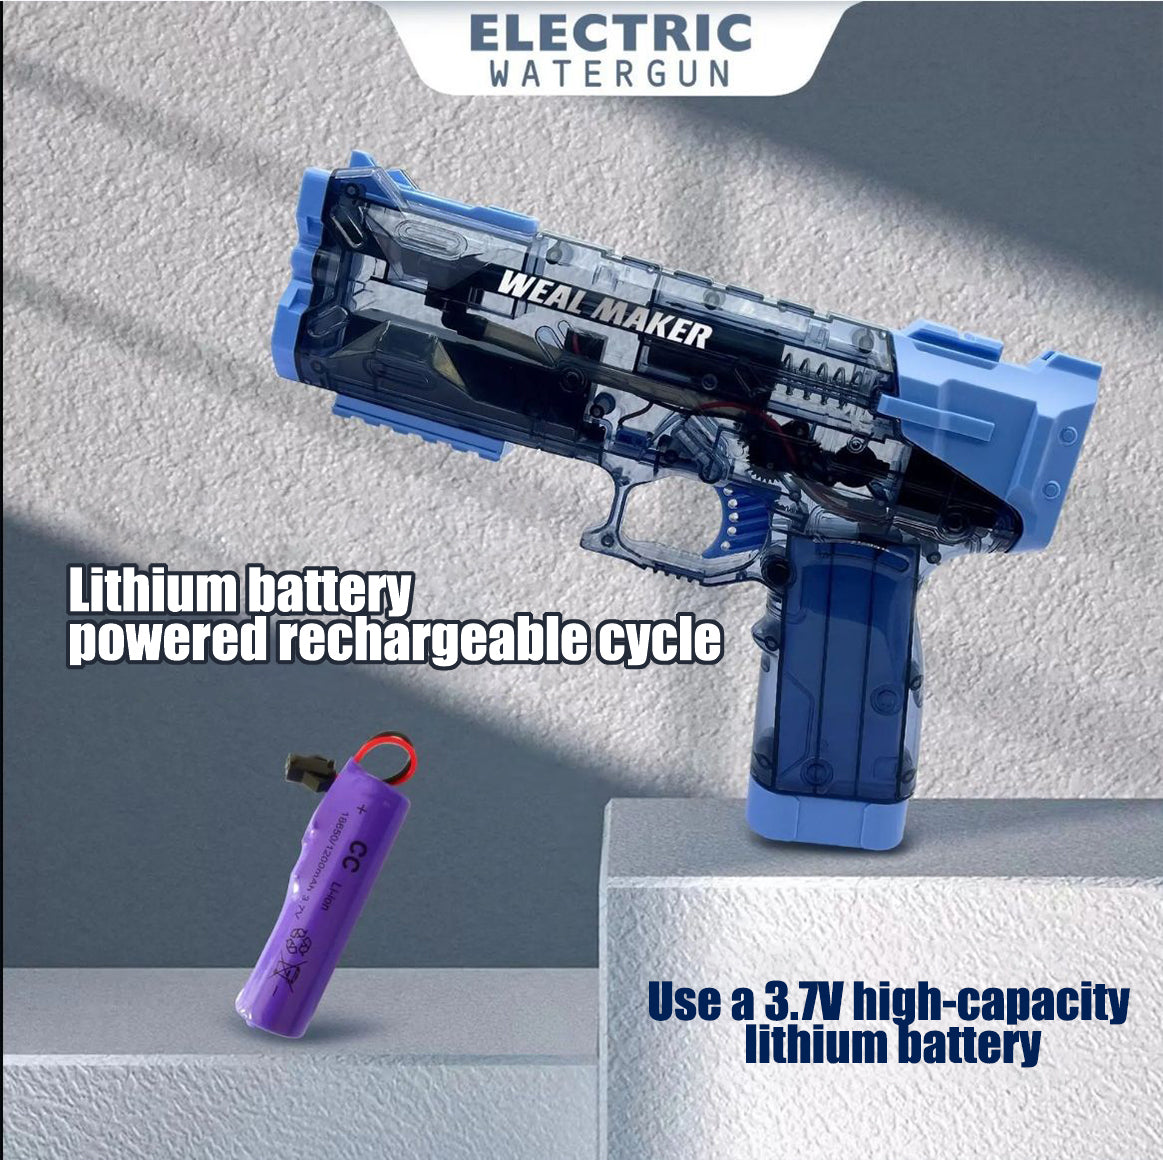 Large capacity, long battery life, powerful rapids electric burst water gun toy gun